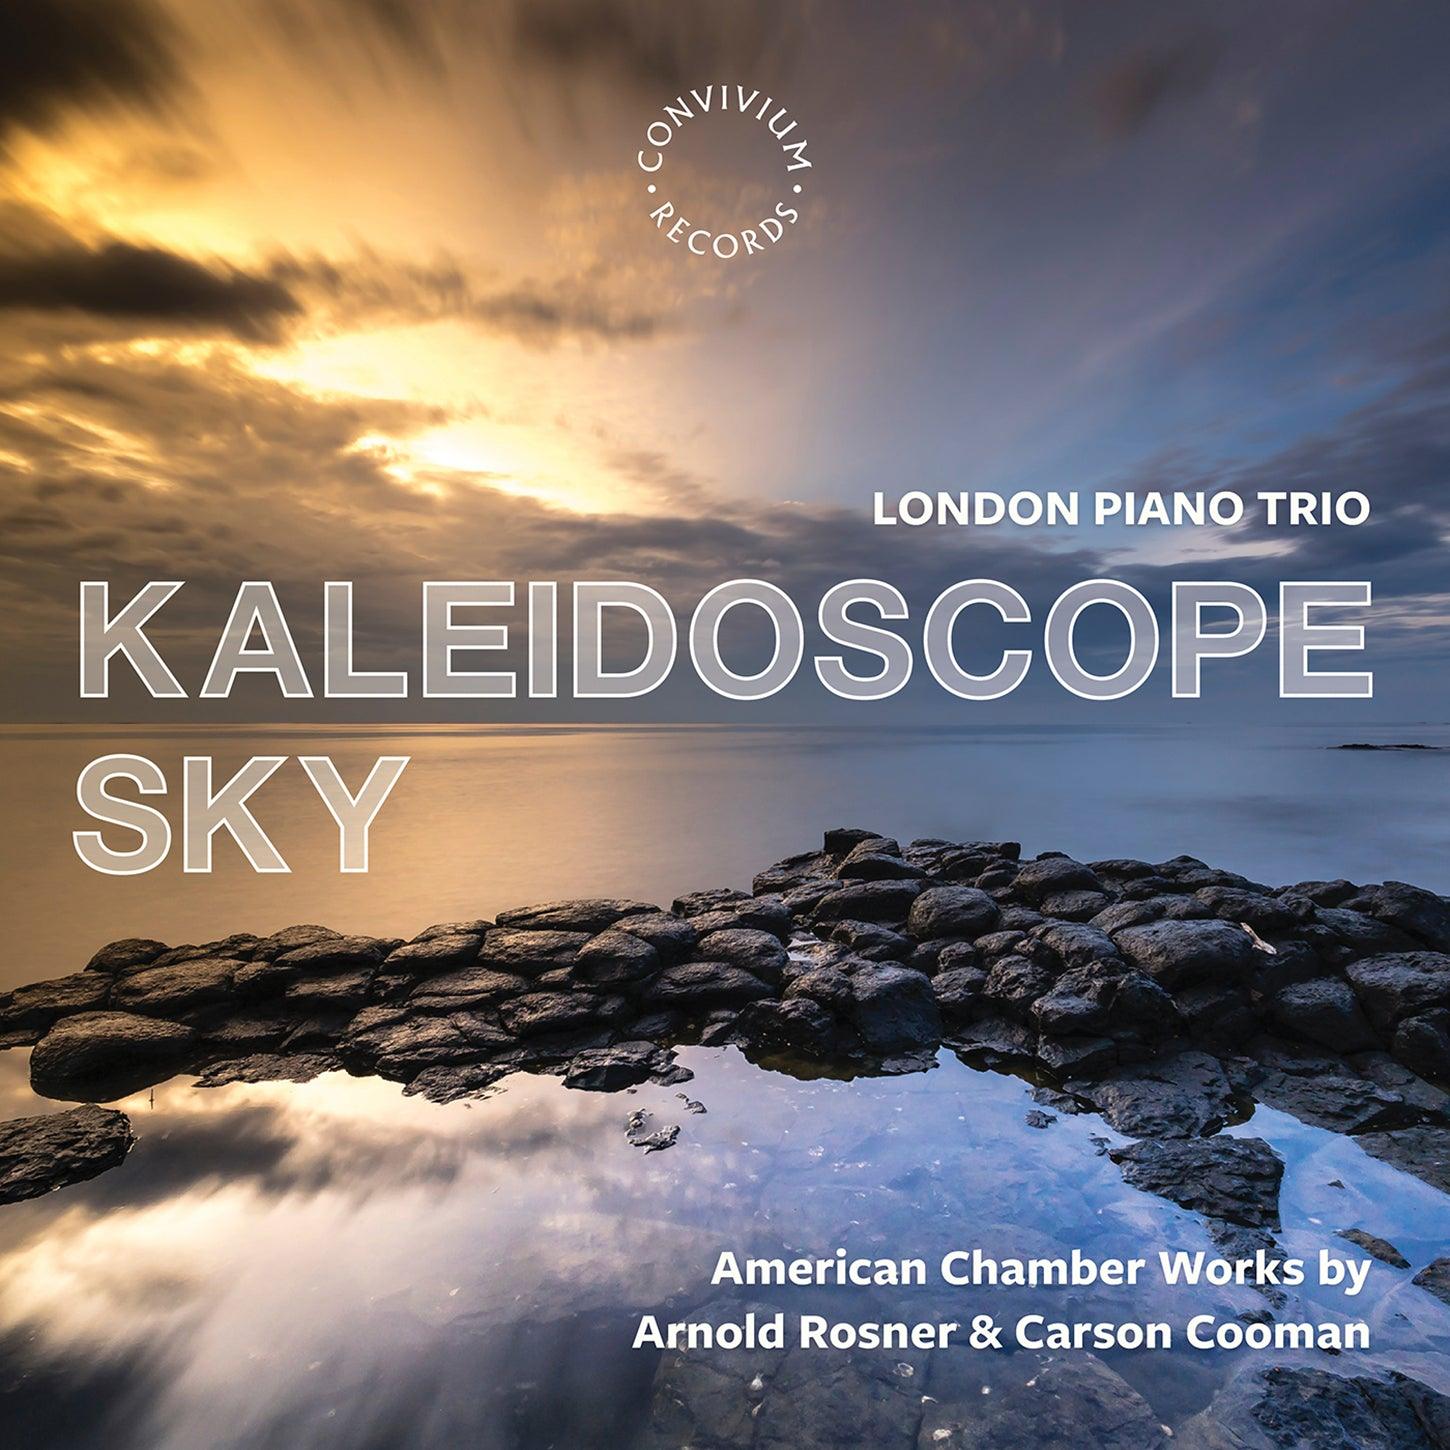 Cooman, Rosner: Kaleidoscope Sky / London Piano Trio - ArkivMusic